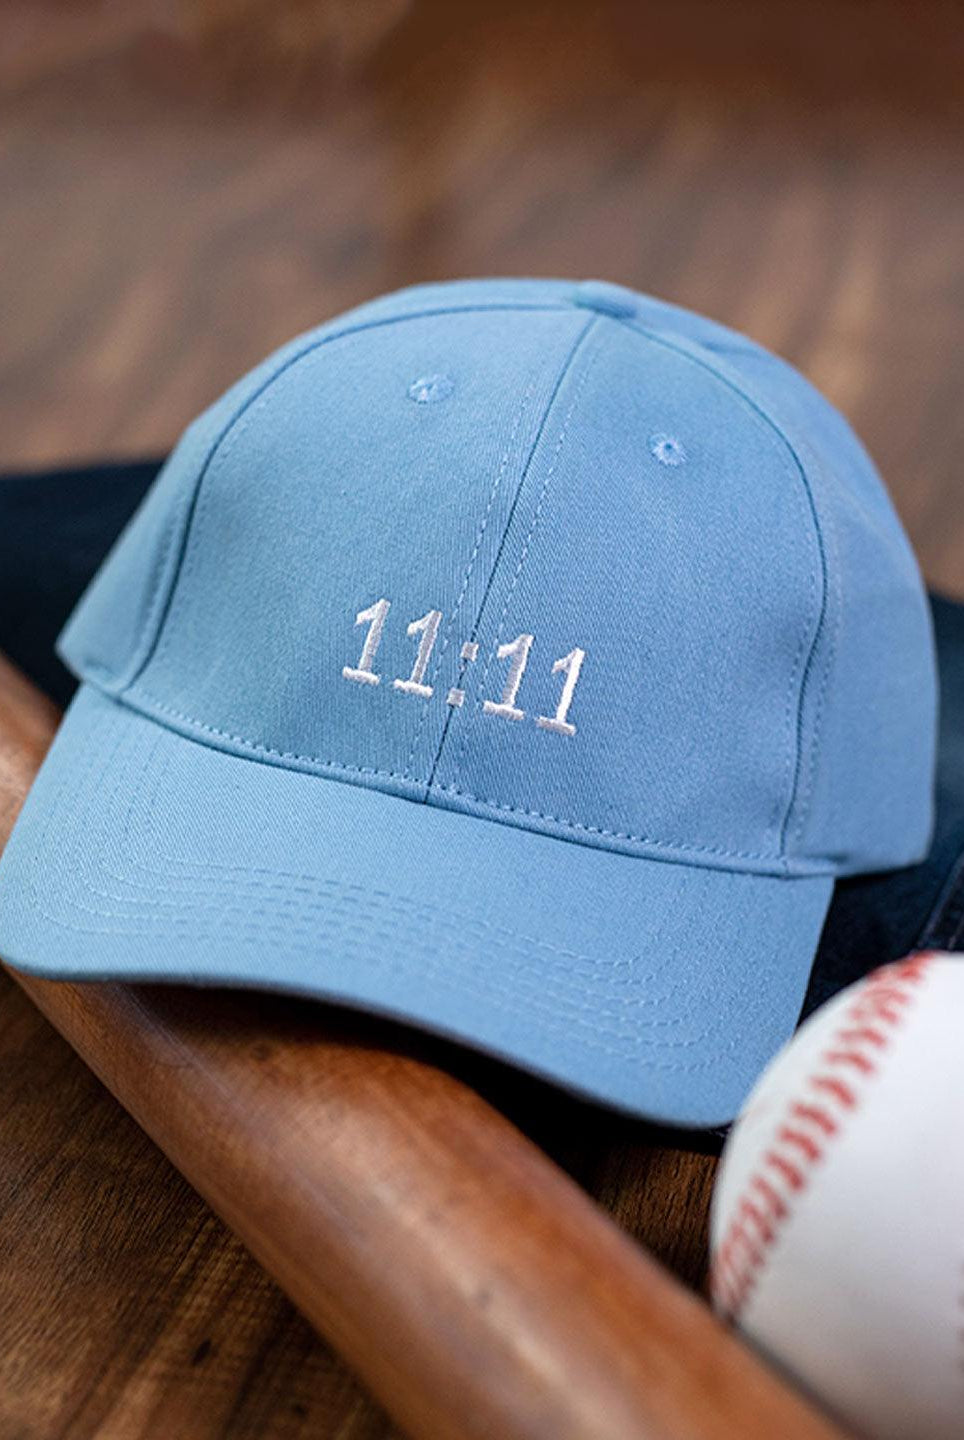 11:11 Embroidered Pale Blue Free Size Unisex Baseball Caps - Tistabene